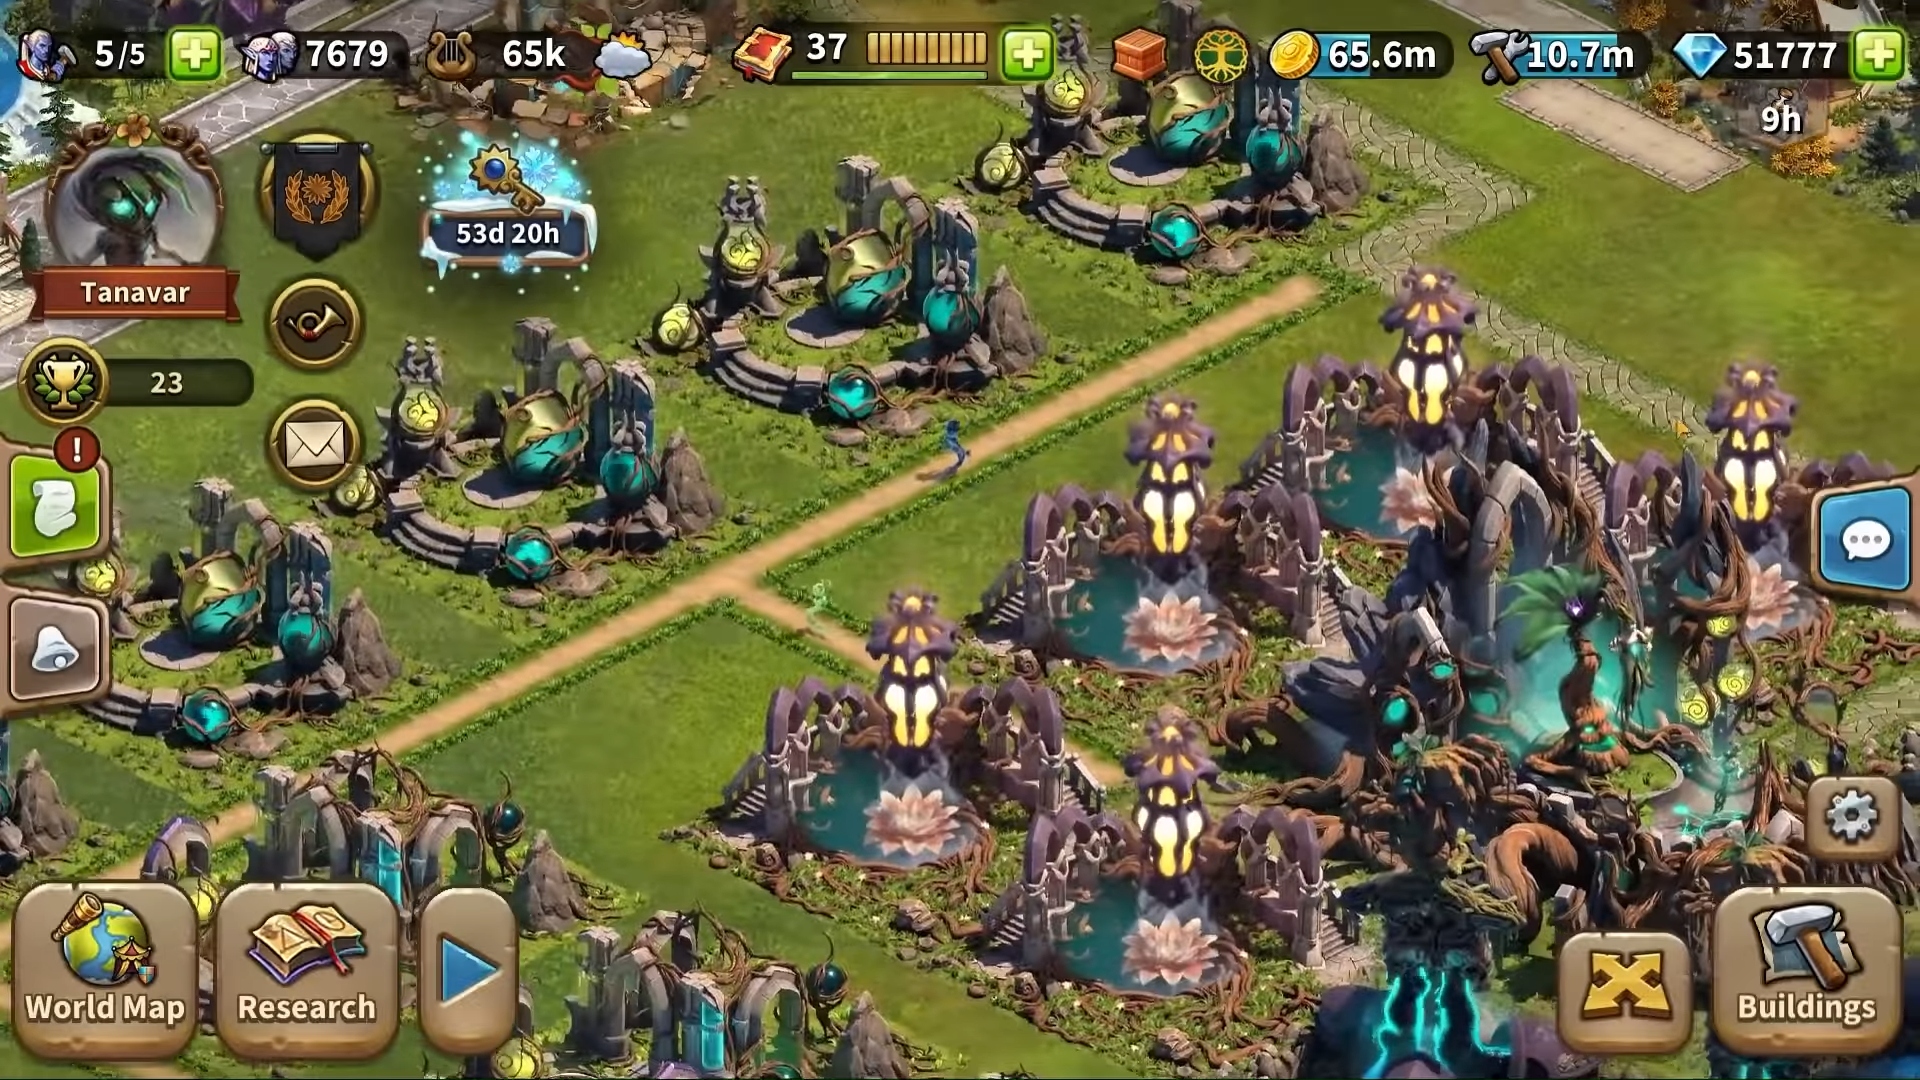 Addictive games - Elvenar. A screenshot shows an isometric view of a fantasy city.